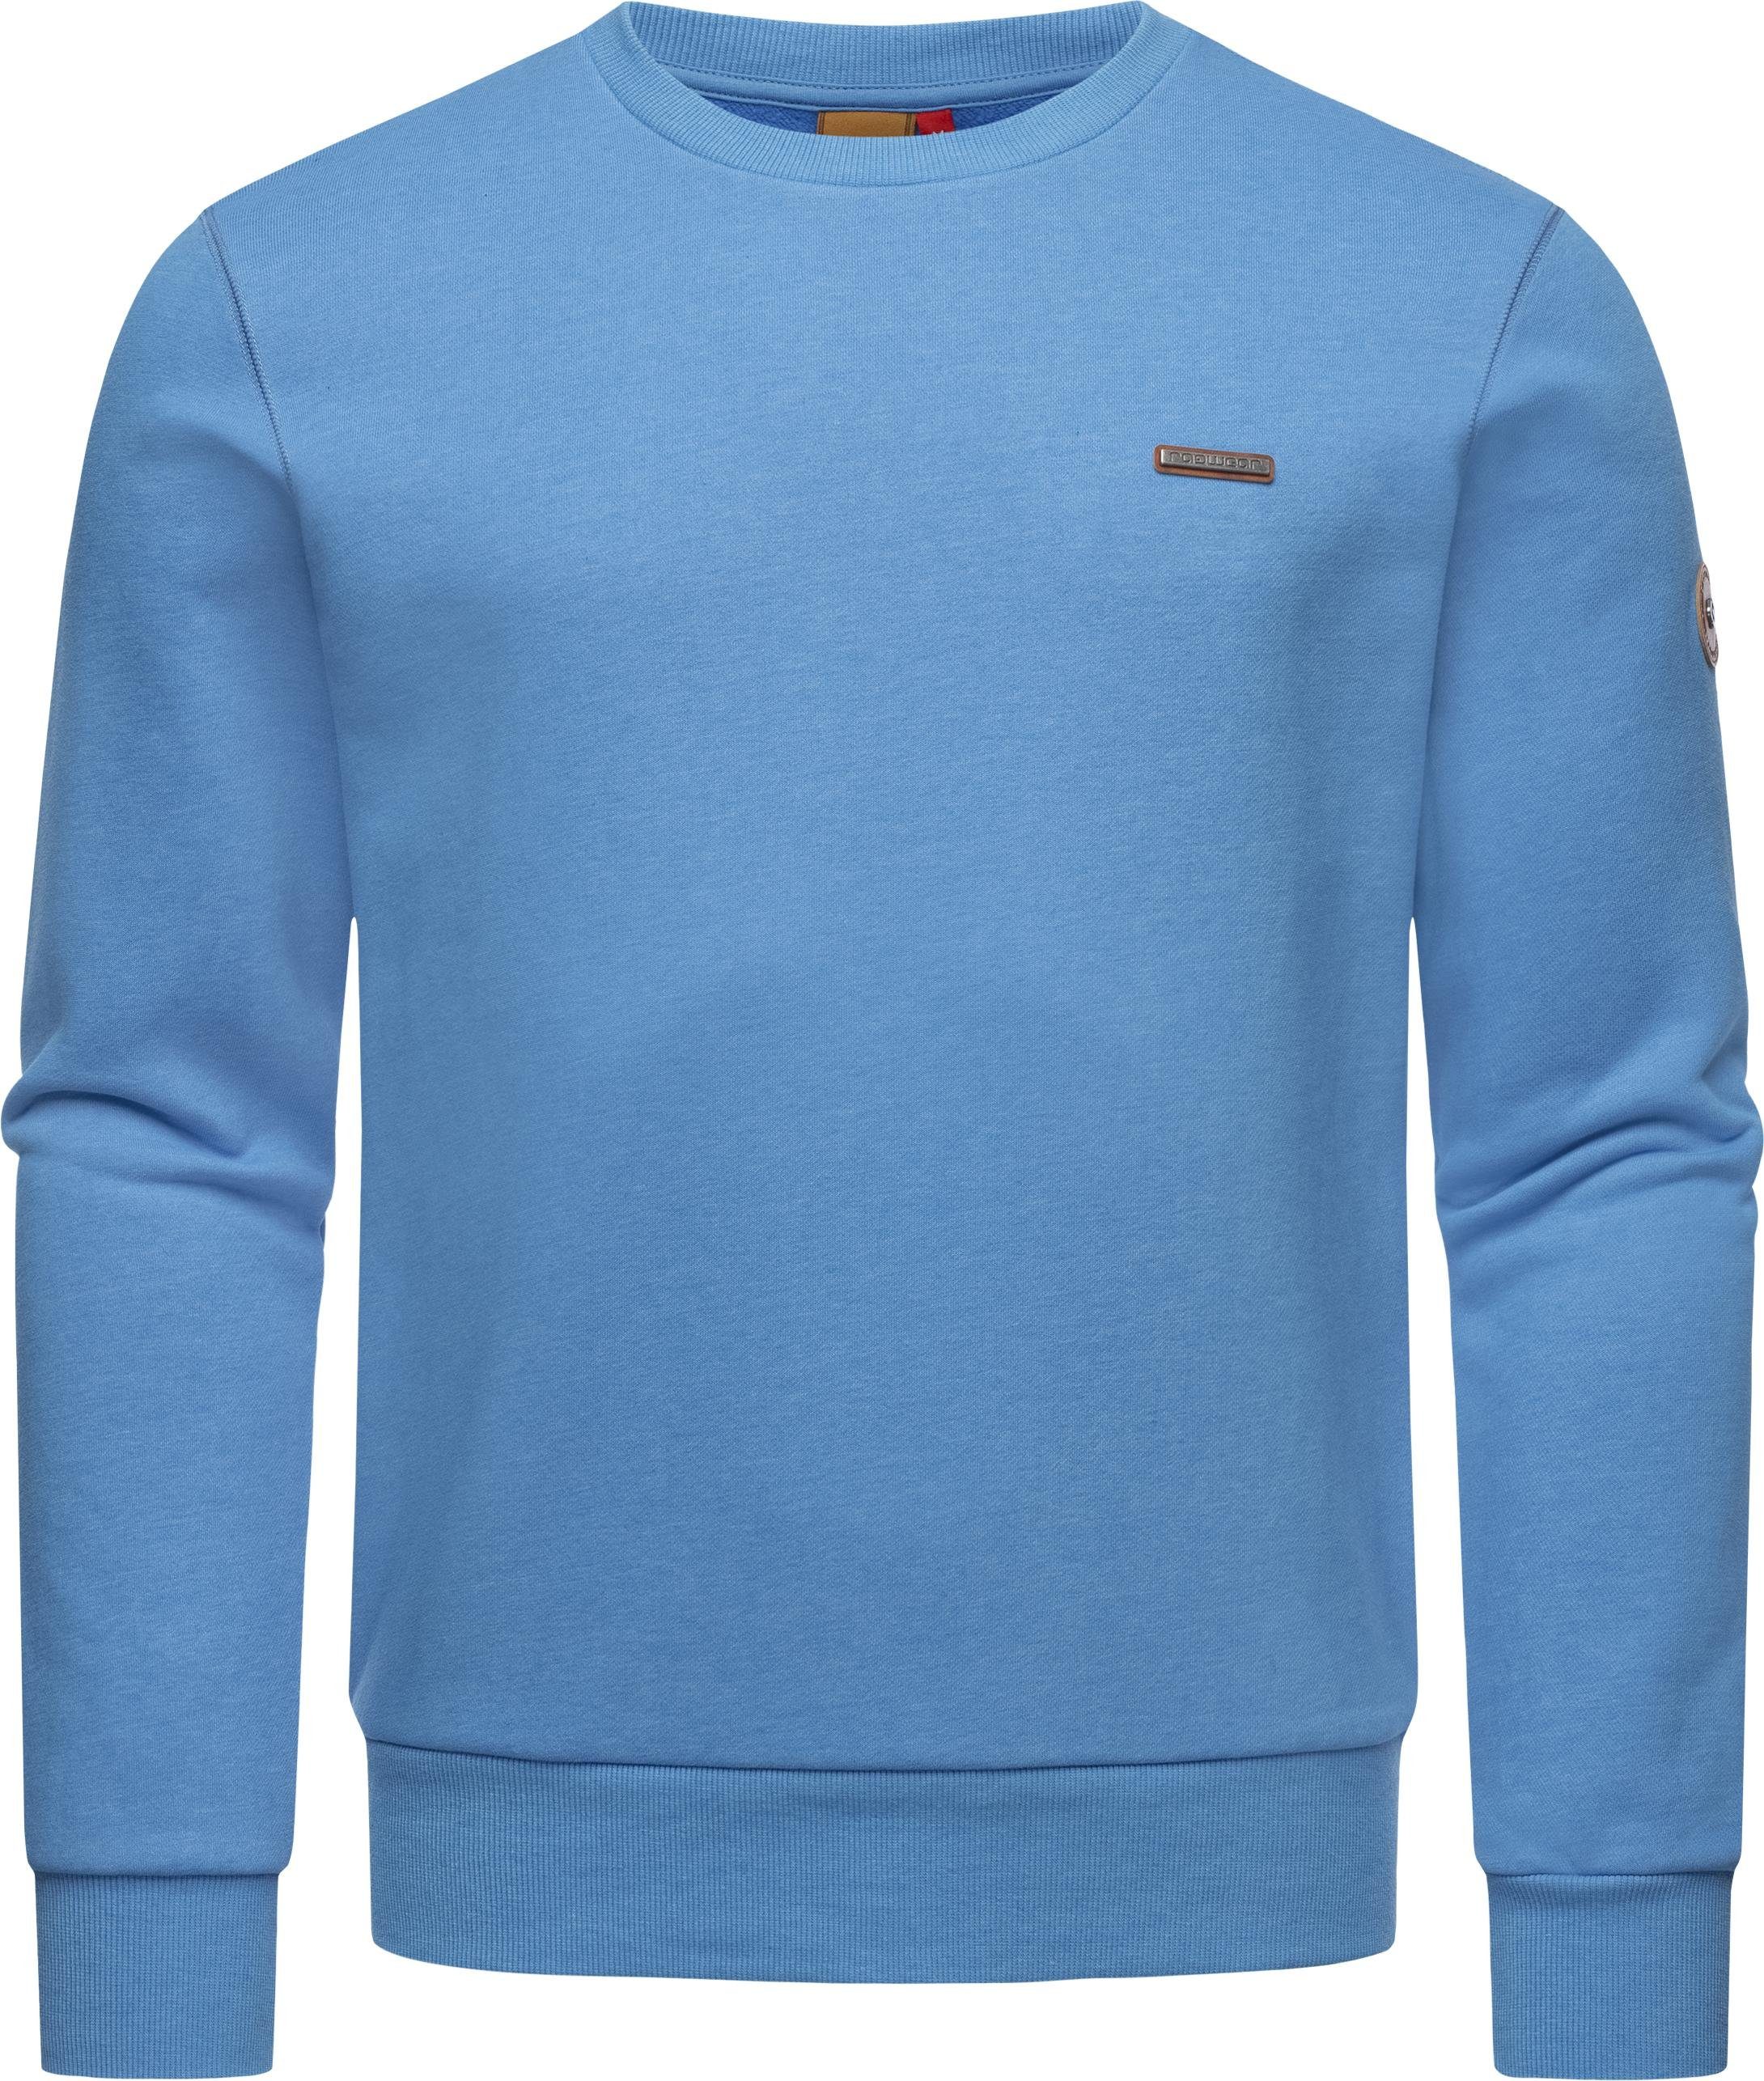 Ragwear Sweater Indie Cooler Basic Herren Pullover blau